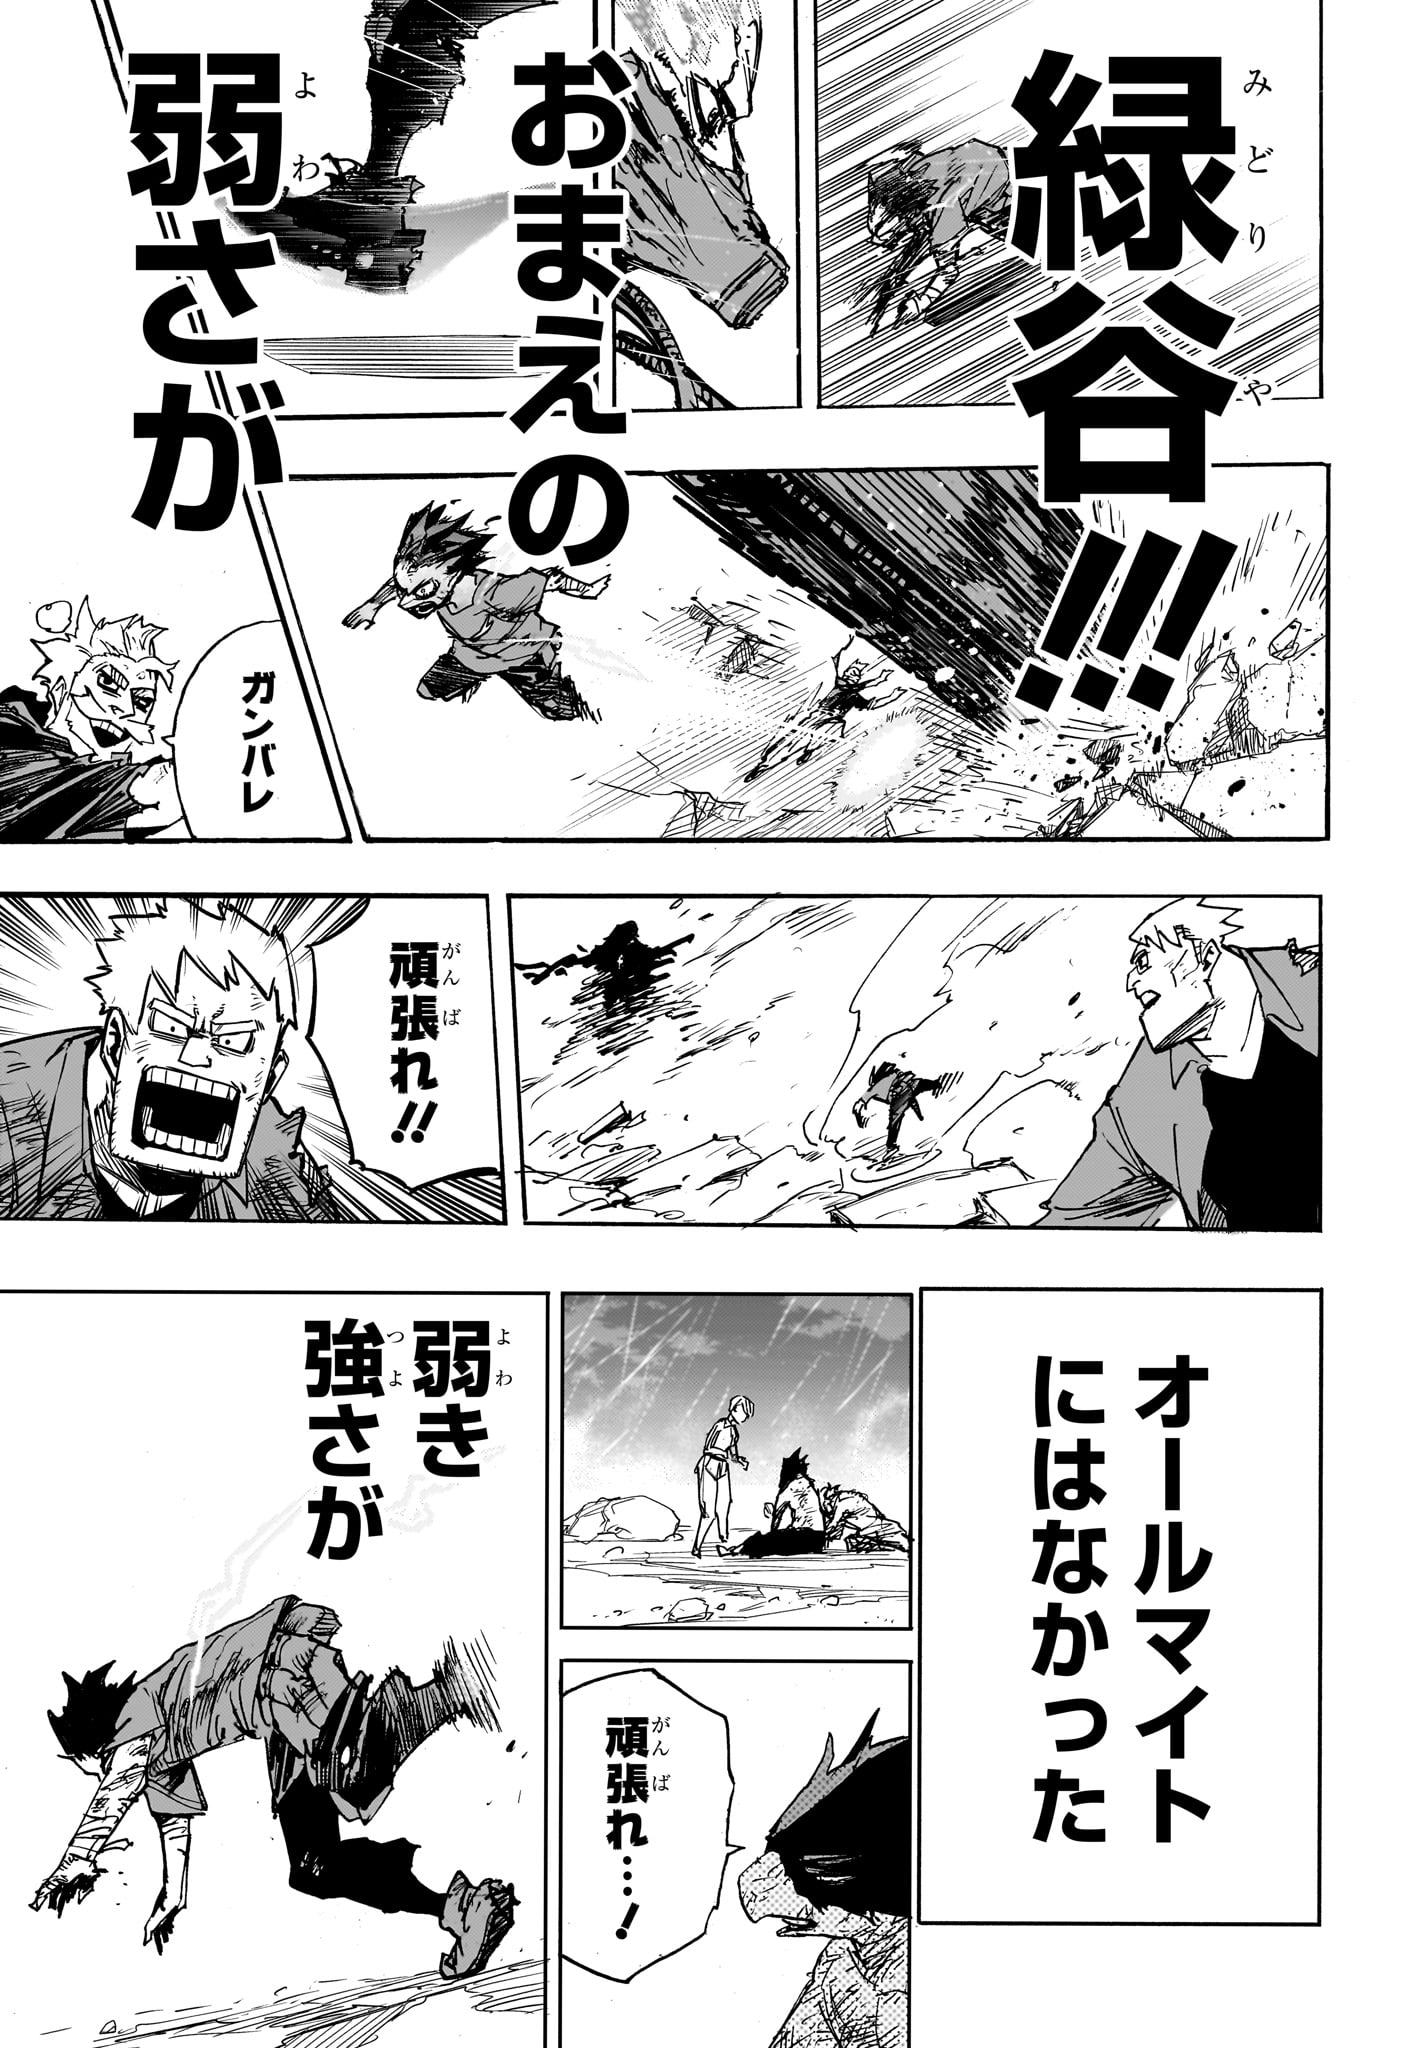 Boku no Hero Academia - Chapter 422 - Page 9